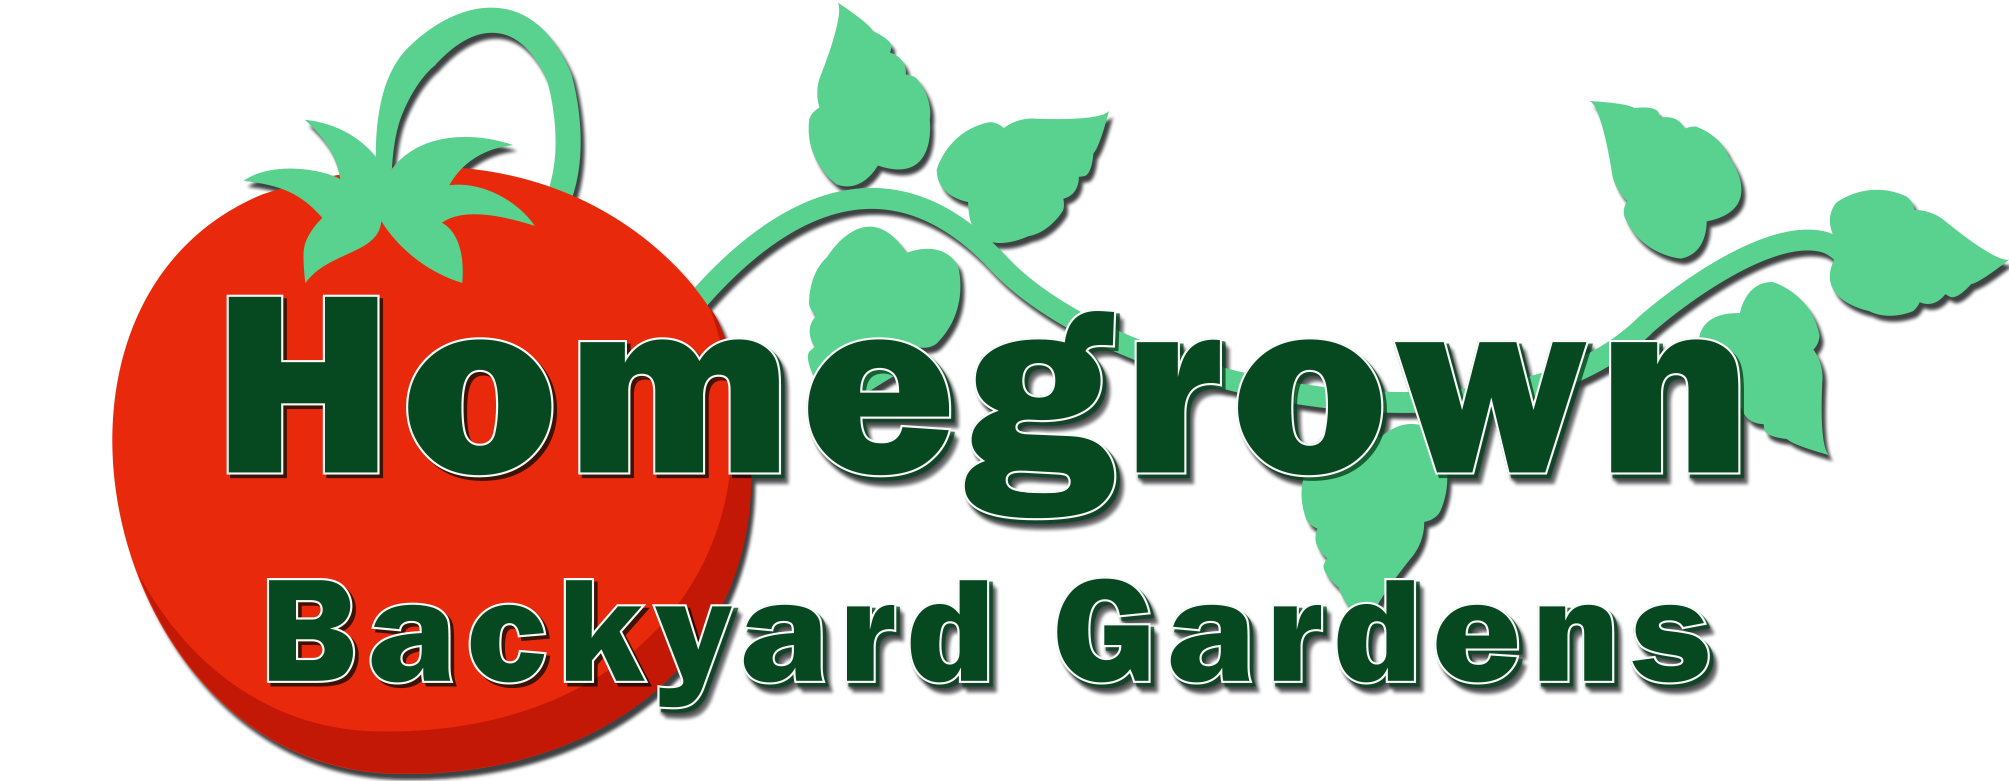 Homegrown Backyard Gardens Logo